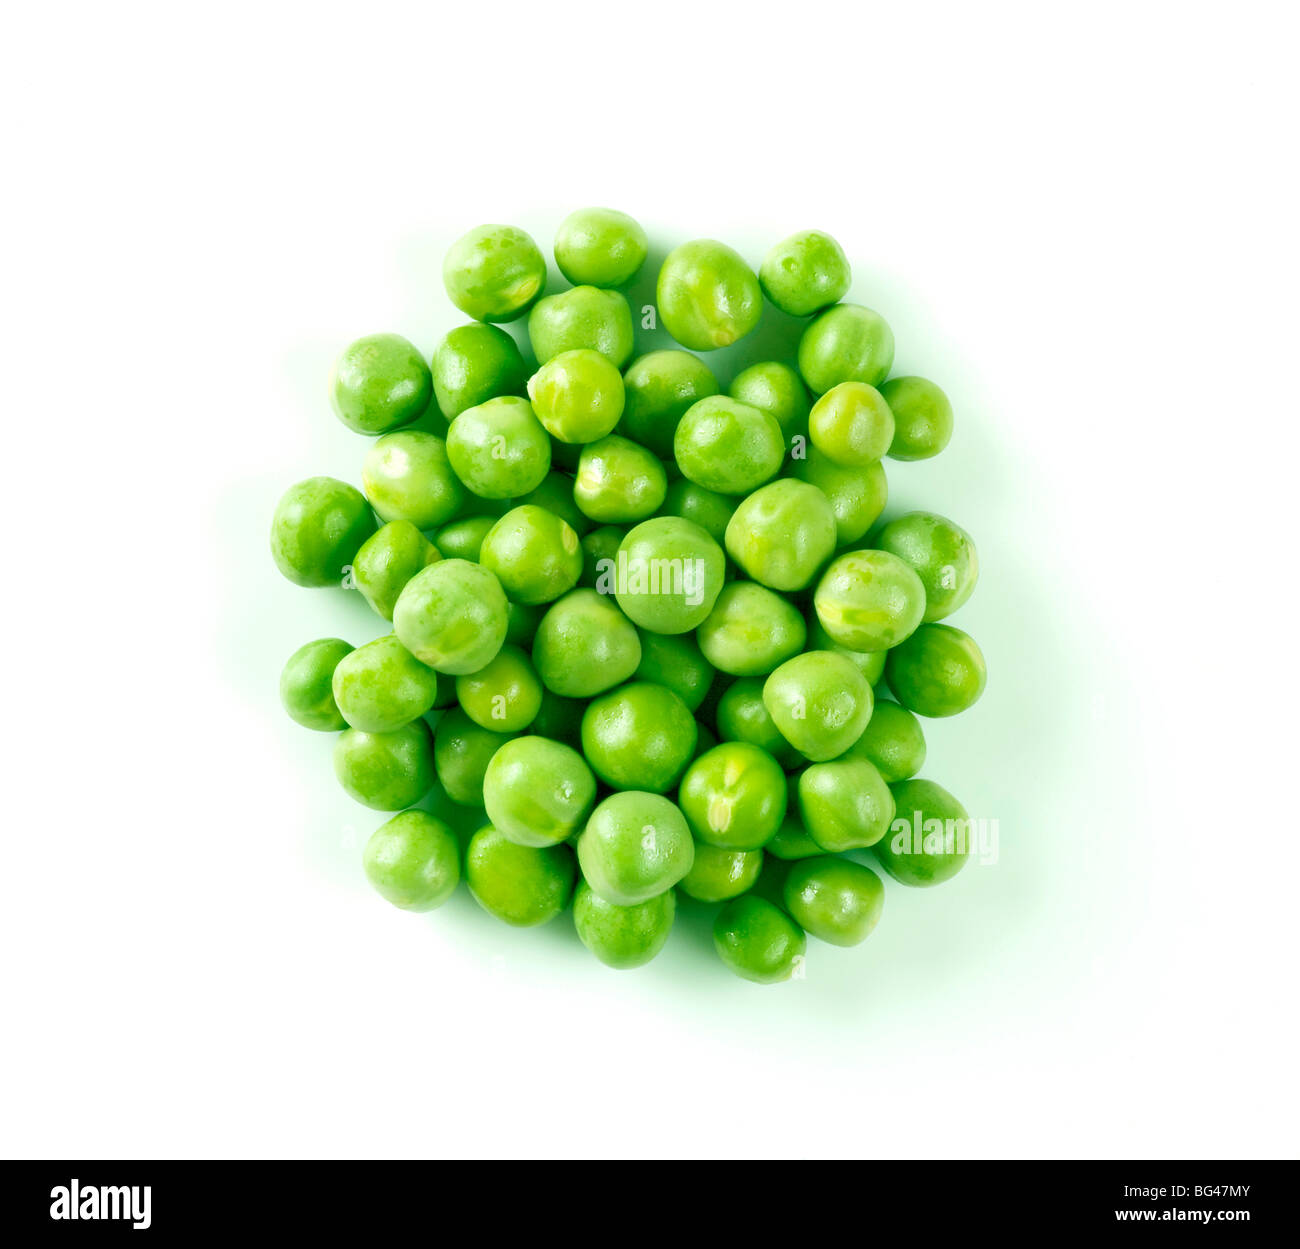 Group of fresh green peas Stock Photo